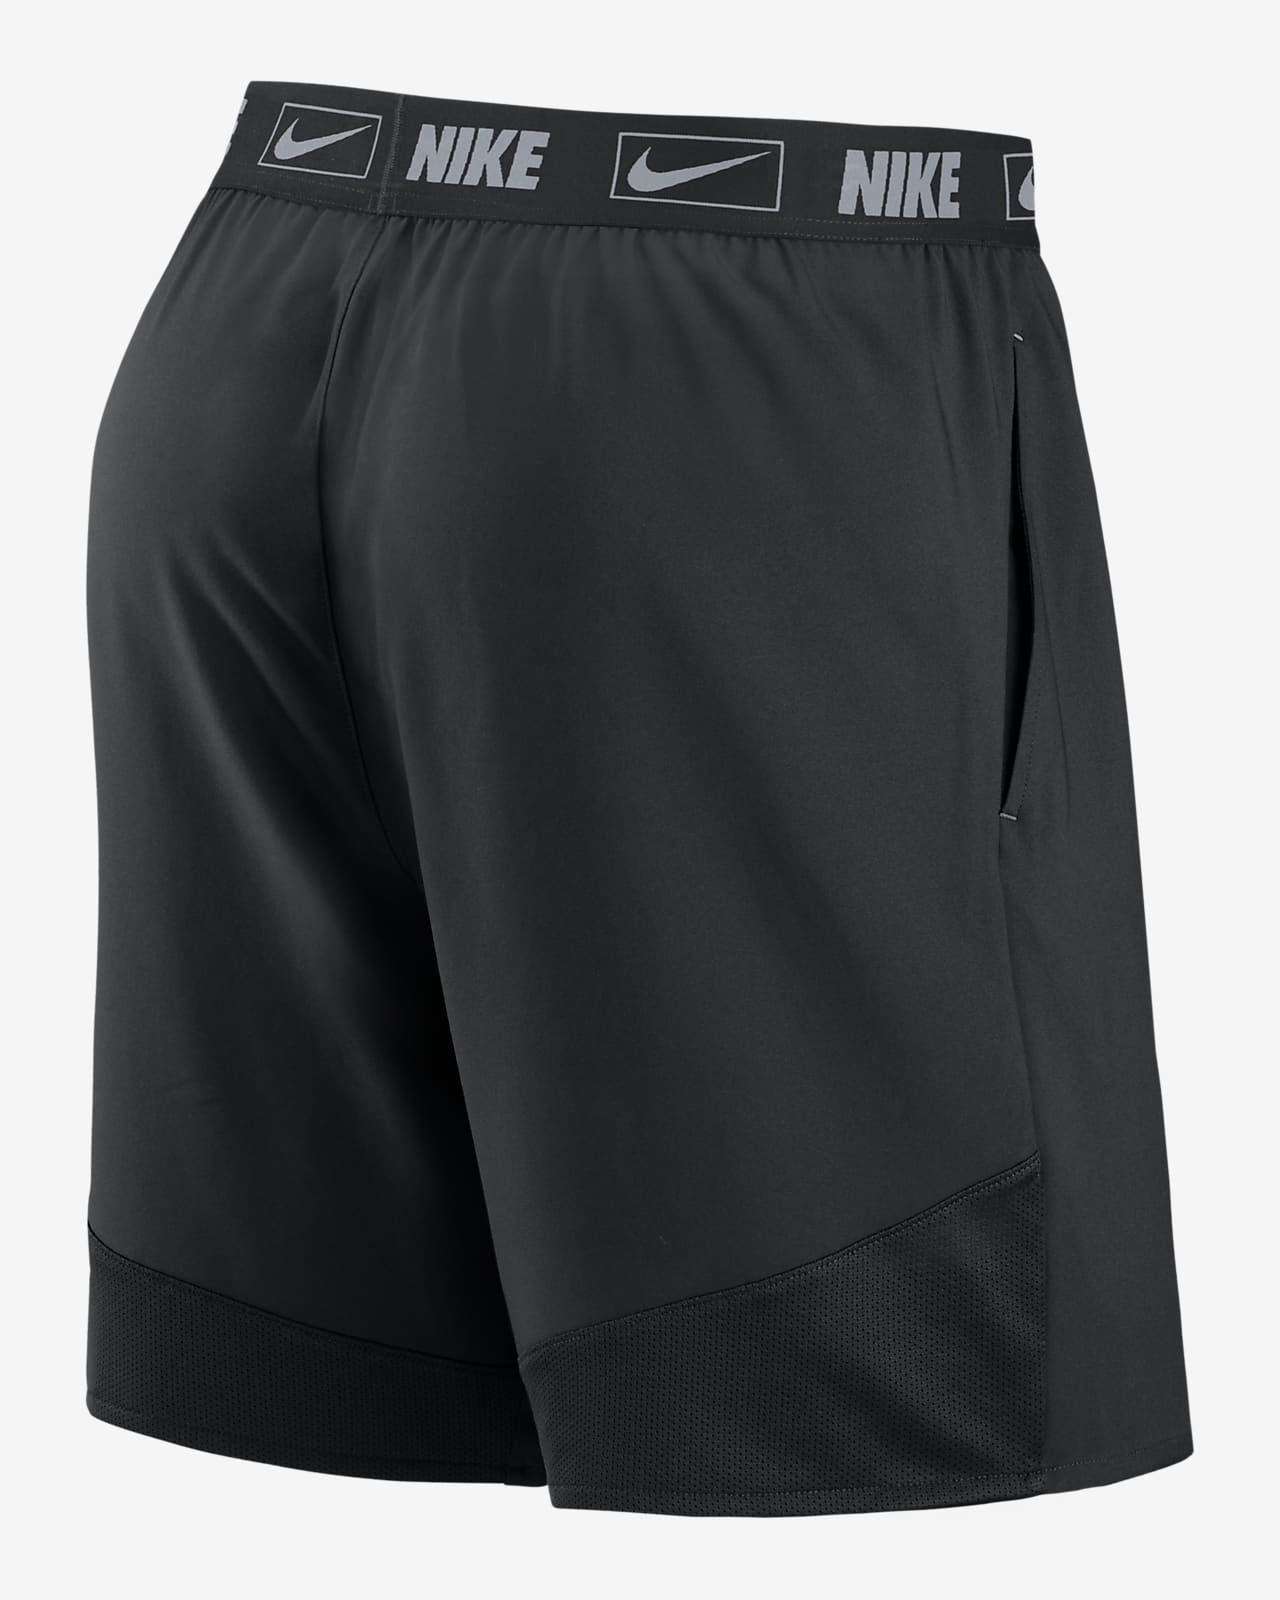 Nike Dri-FIT City Connect Logo (MLB Pittsburgh Pirates) Men's T-Shirt